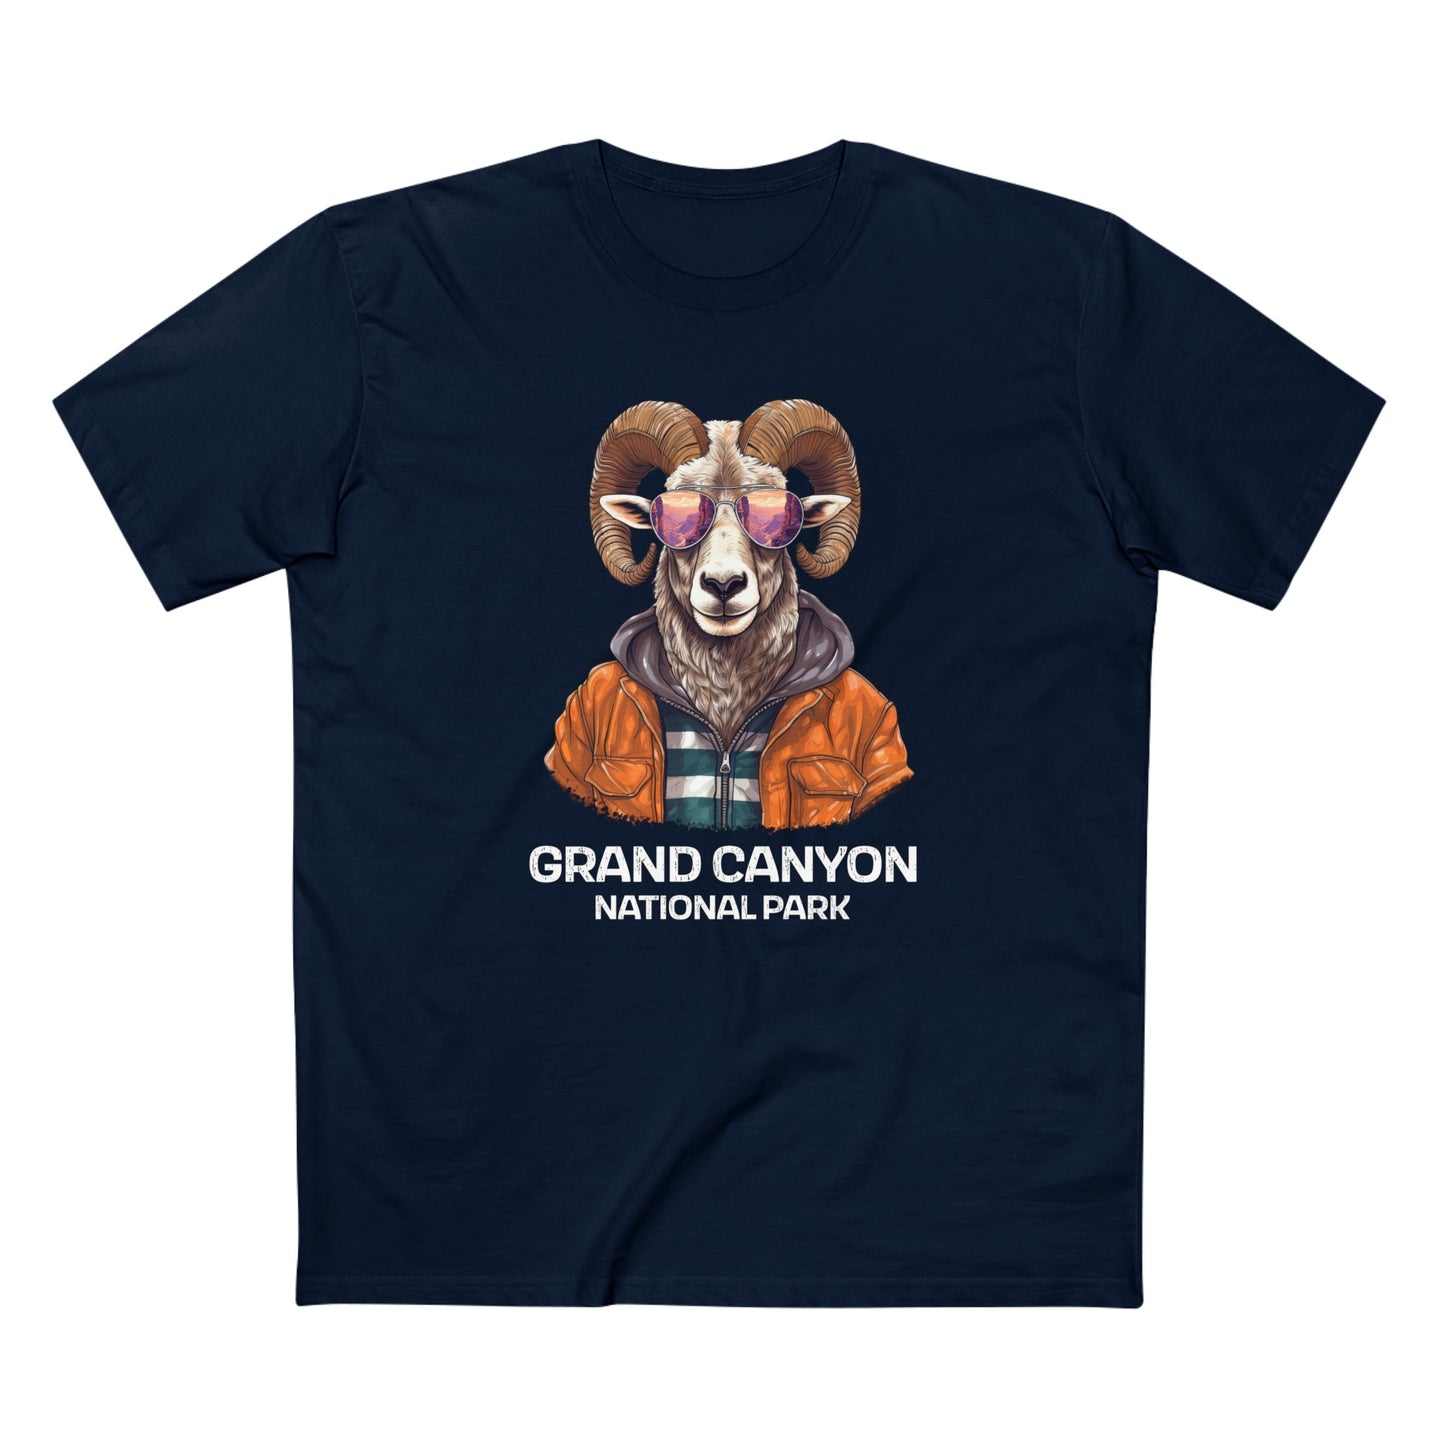 Grand Canyon National Park T-Shirt - Bighorn Sheep